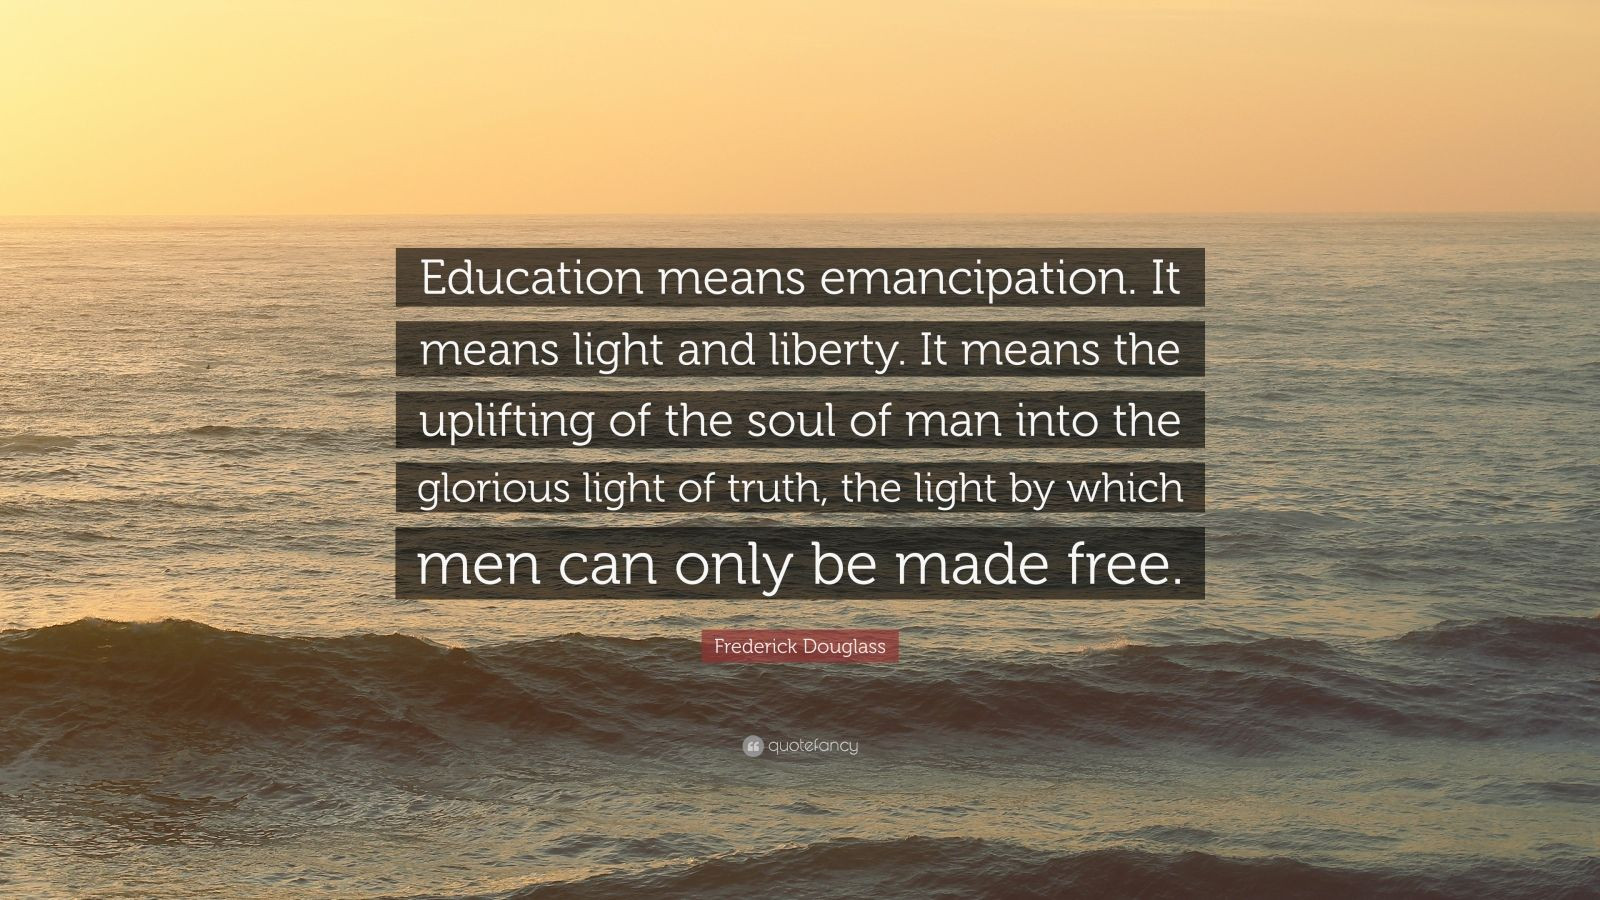 Frederick Douglass Education Quotes
 Frederick Douglass Quote “Education means emancipation